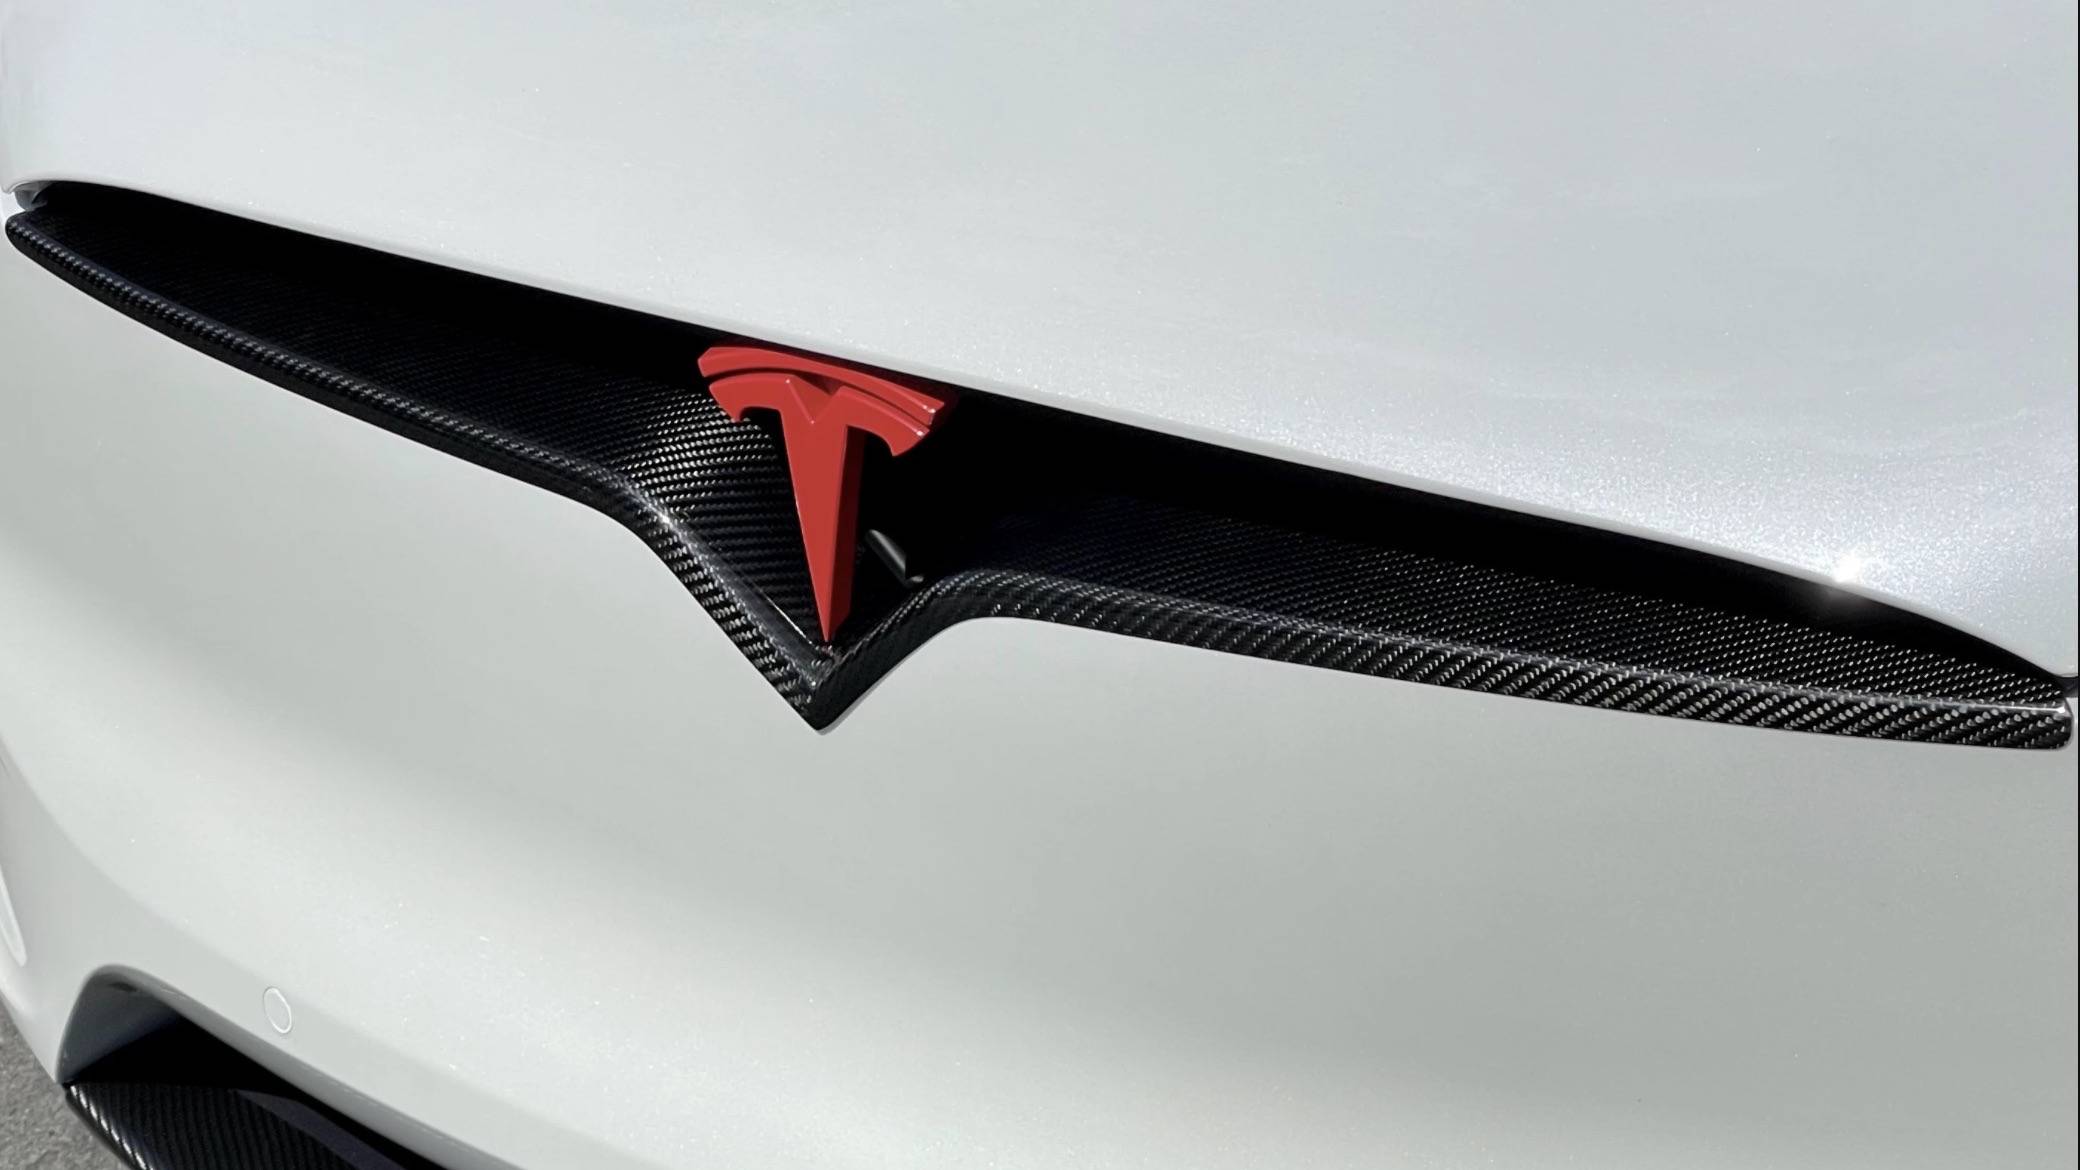 Tesla Model S and Model X Accessories – Shop4Tesla